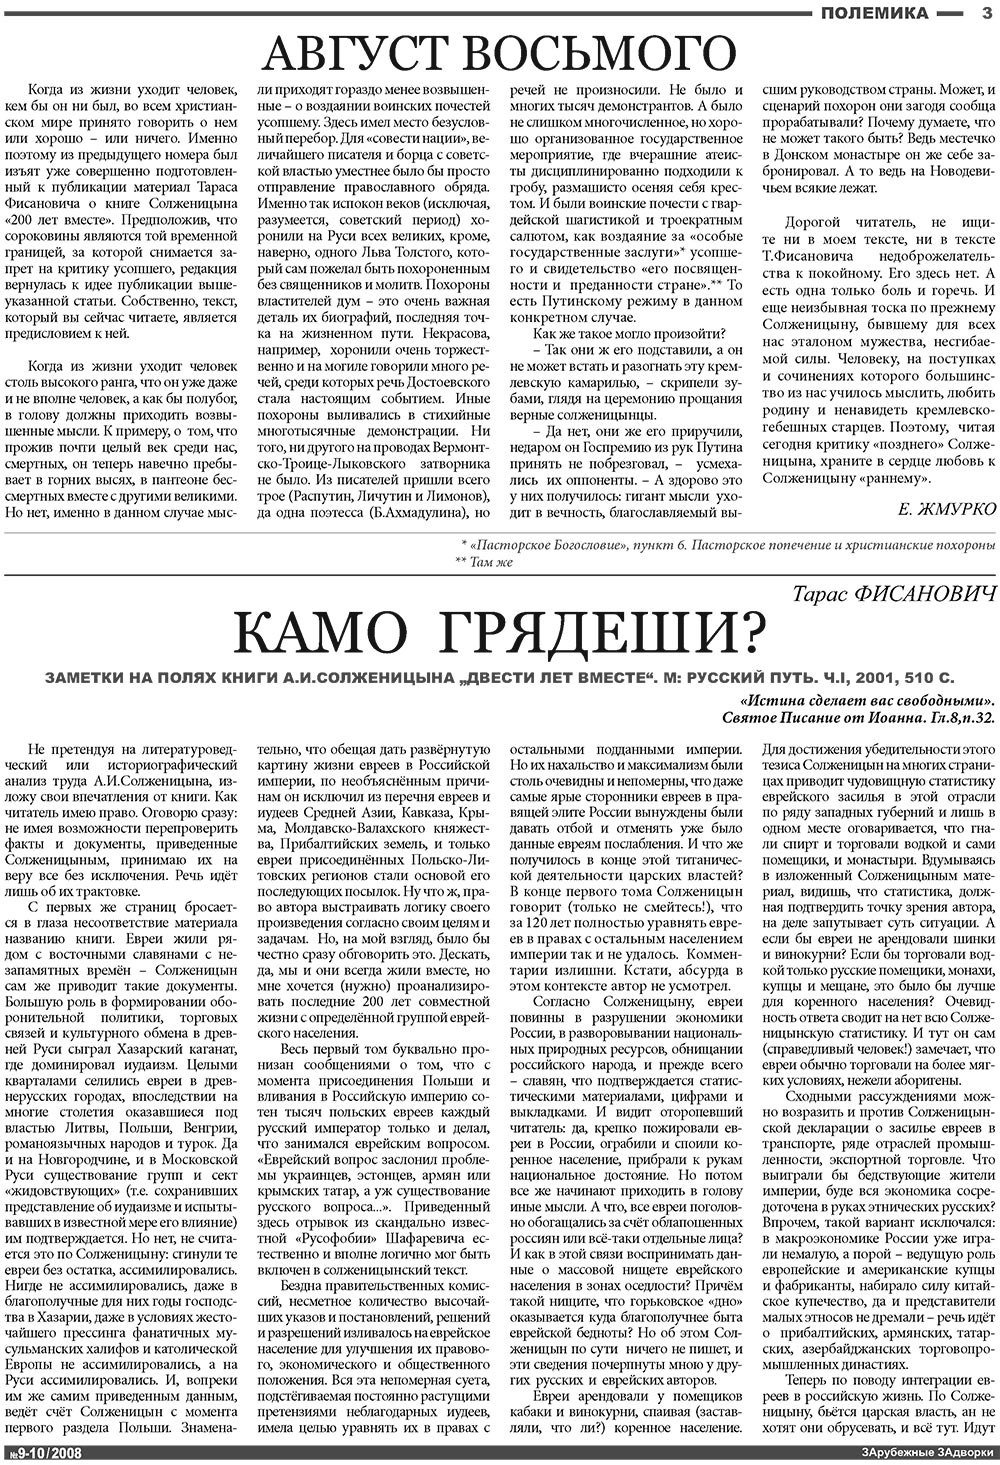 Известия BW (газета). 2008 год, номер 10, стр. 3